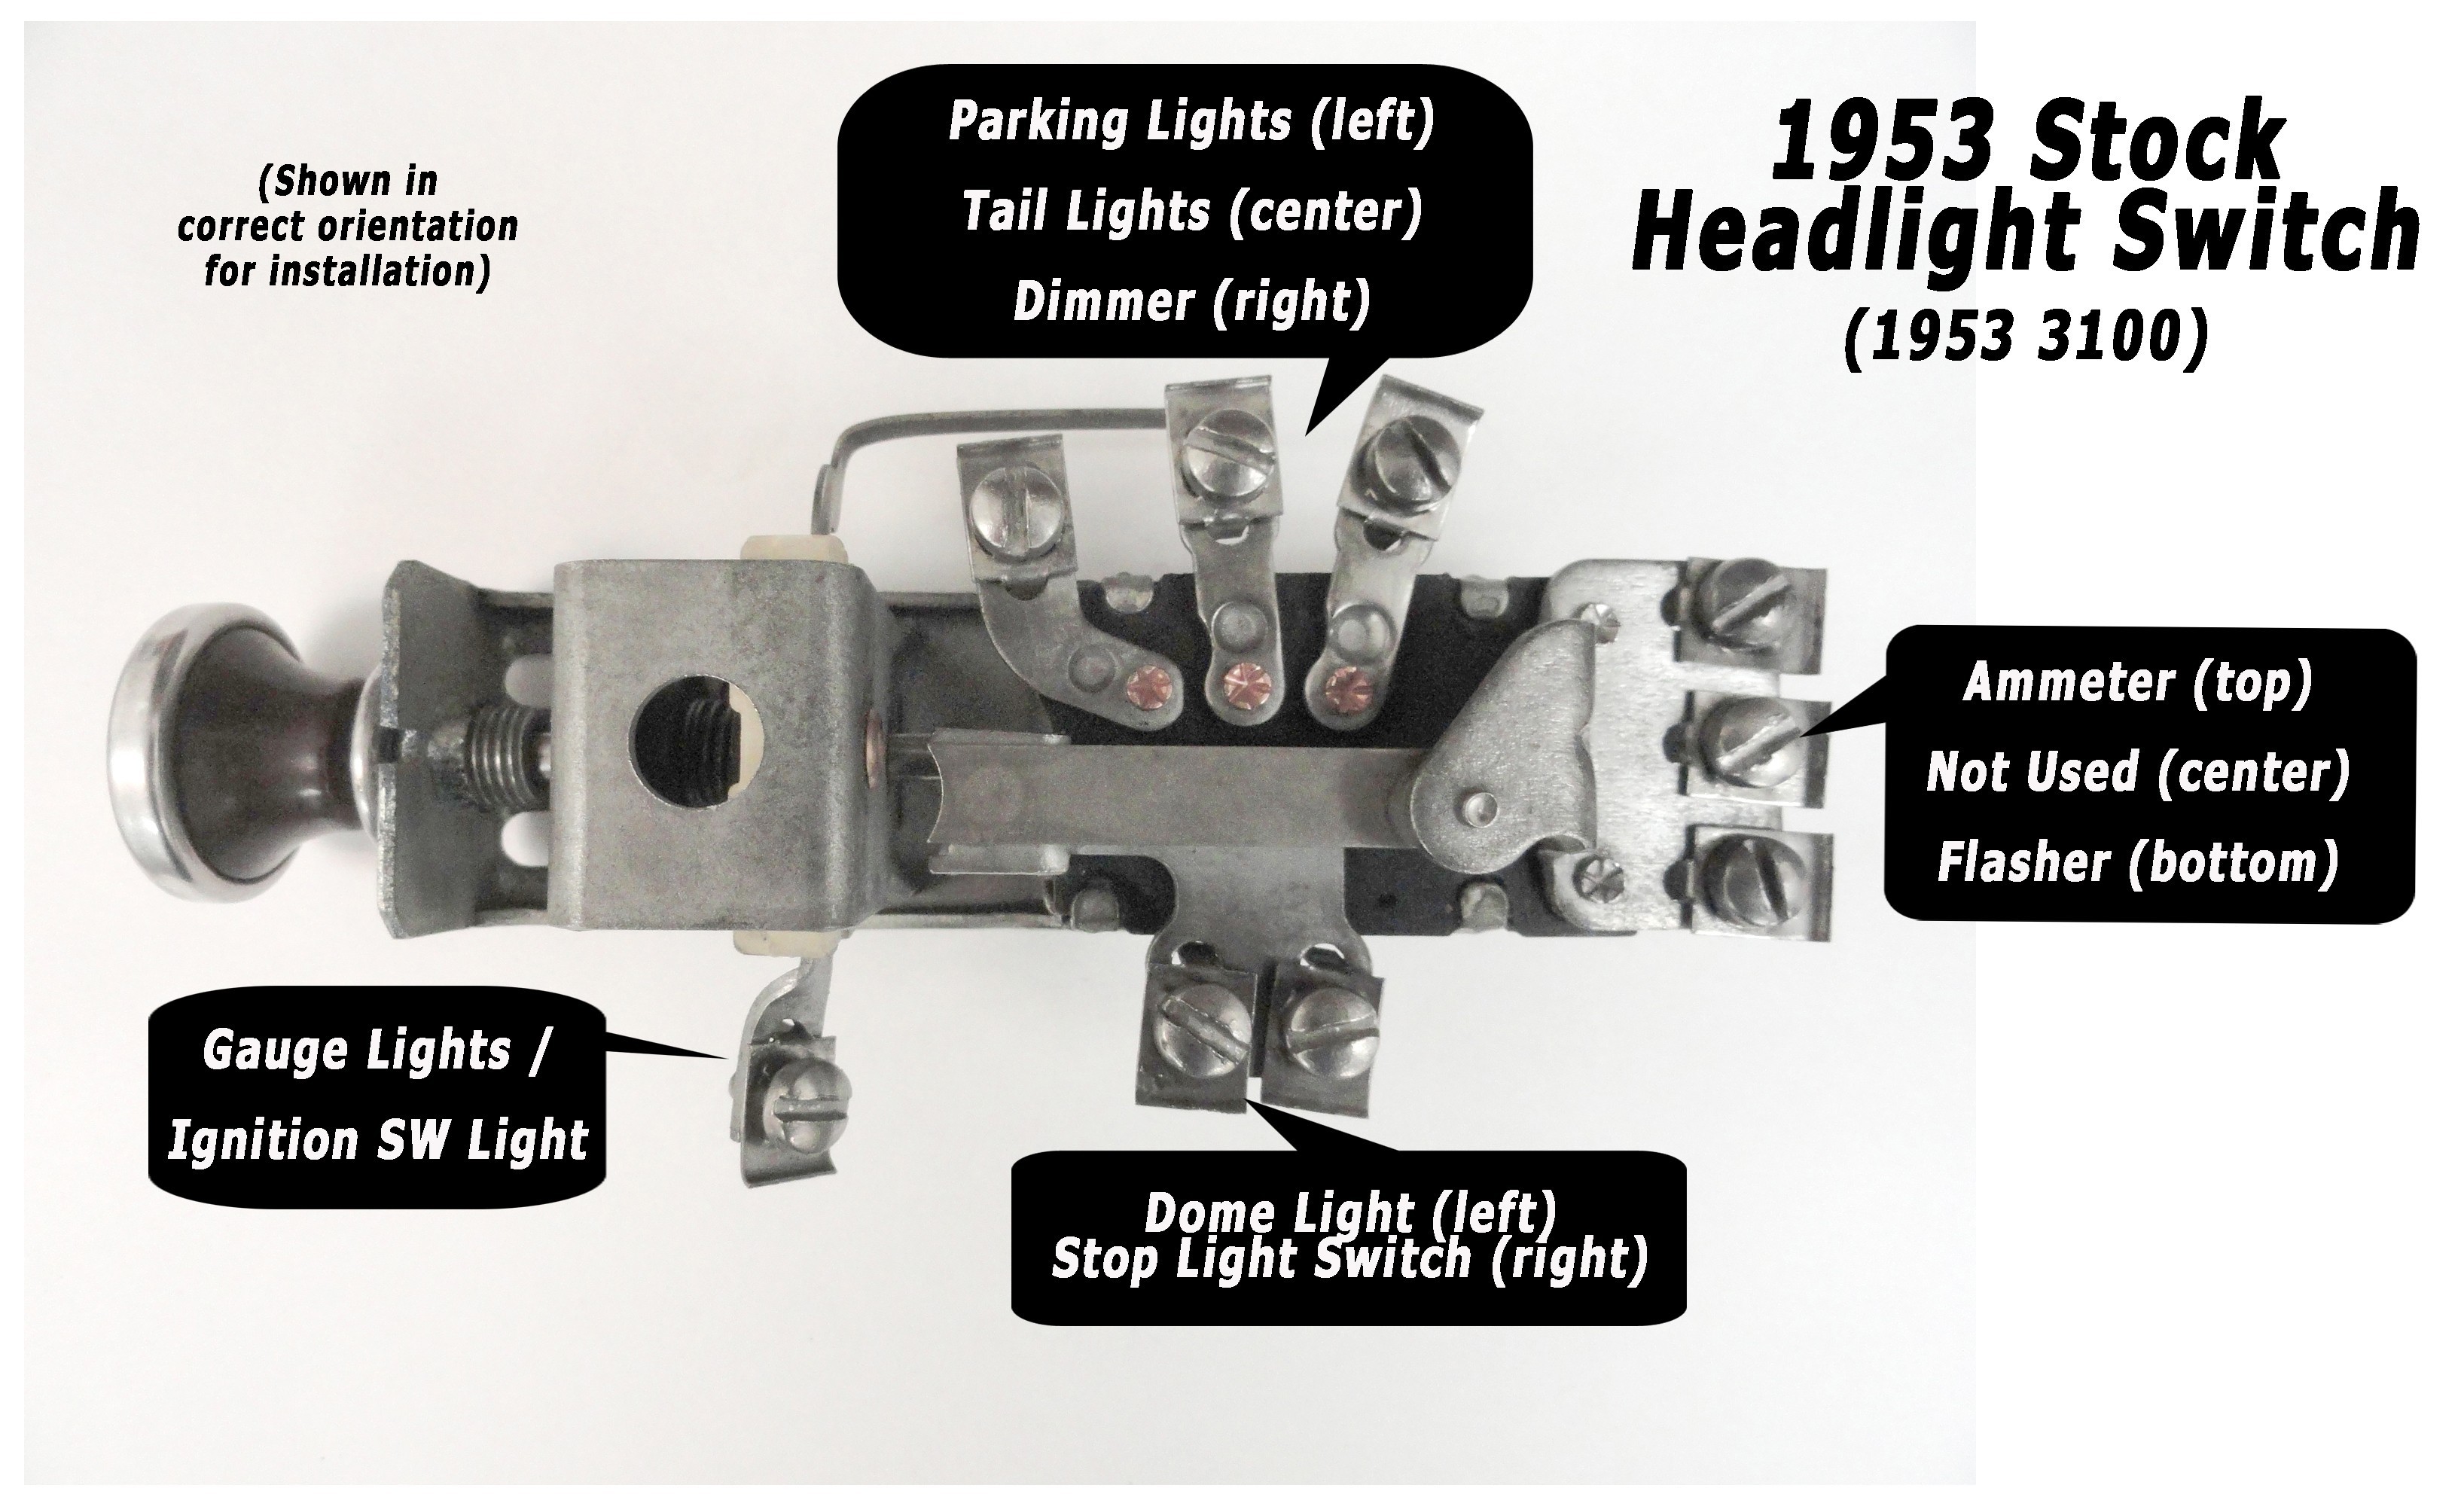 Headlight Switch Wiring Diagram Chevy Truck Wiring Of Headlight Switch Wiring Diagram Chevy Truck